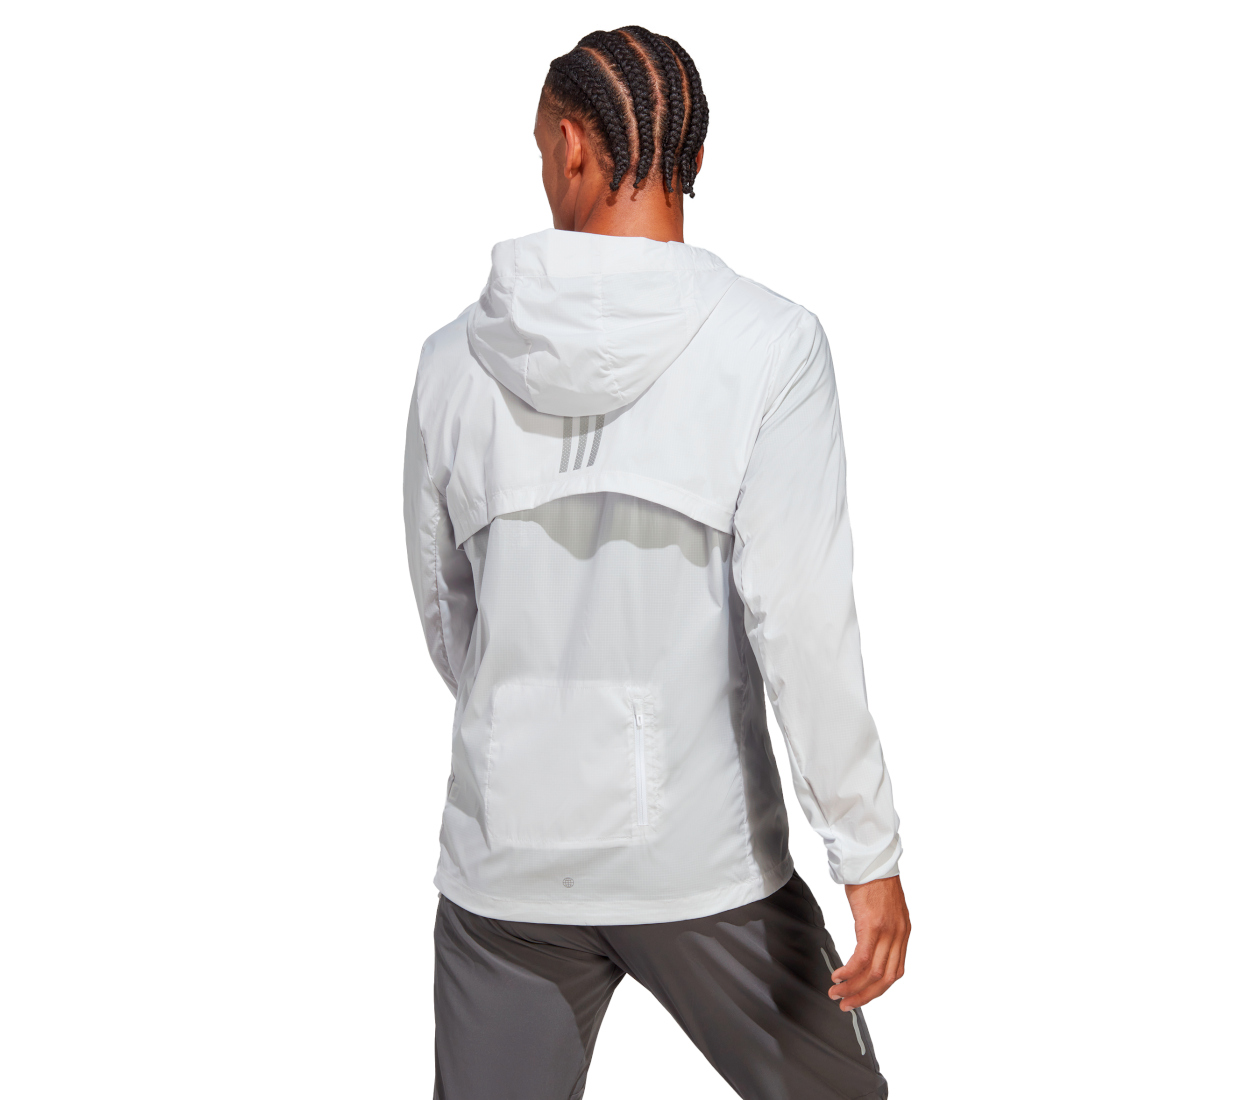 Adidas Marathon Jacket (M) giacca traspirante e impermeabile | LBM Sport